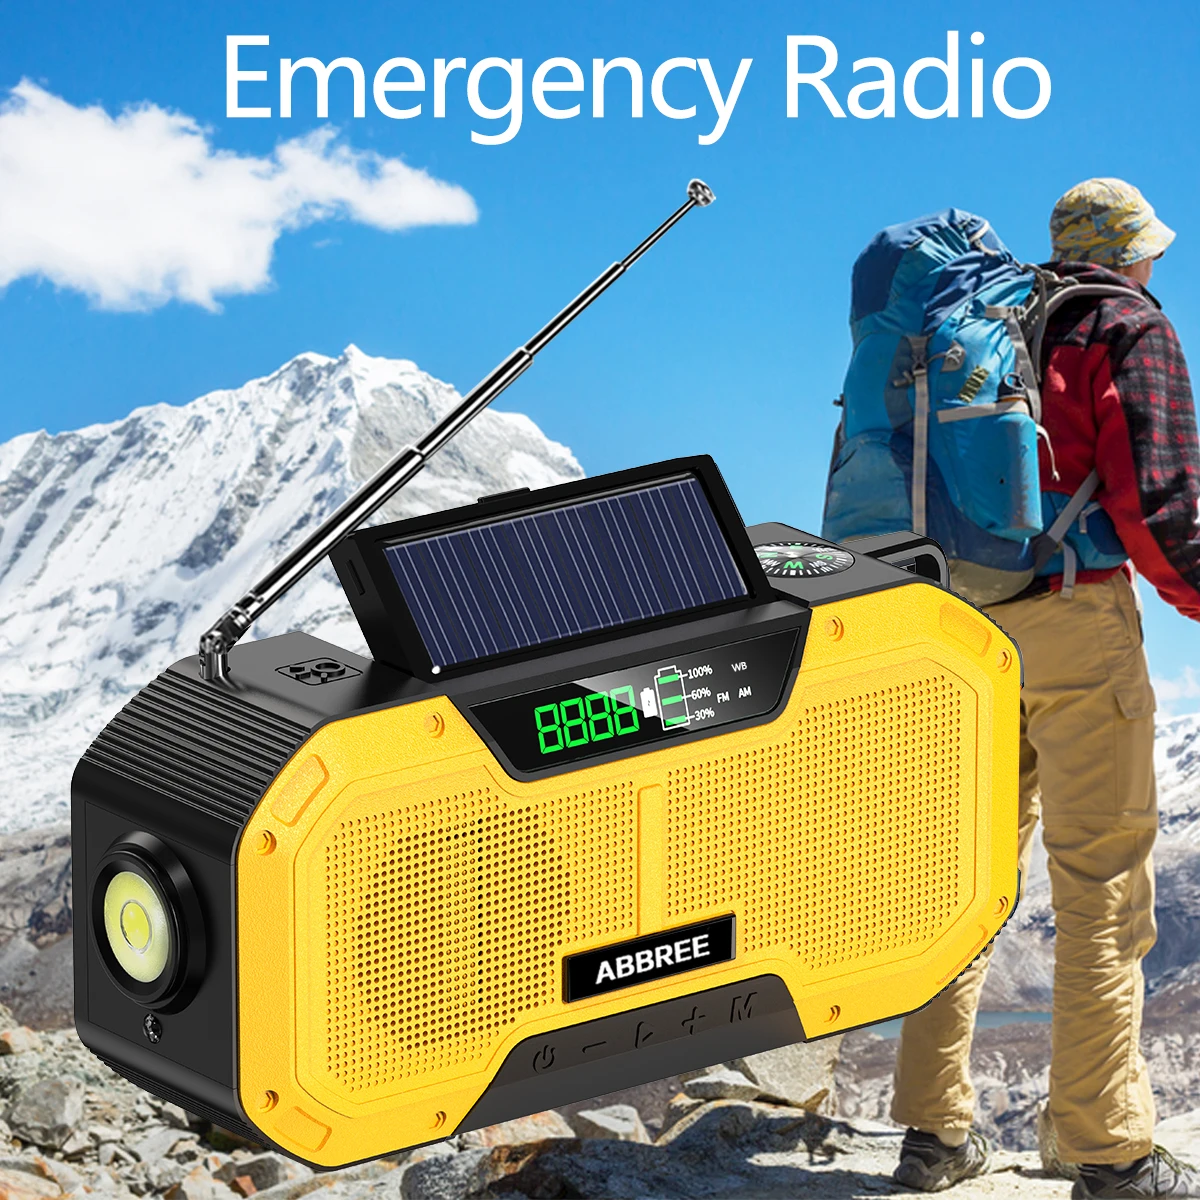 

ABBREE AM/FM/NOAA Weather Radio Emergency Solar Hand Crank Emergency Radio Auto Scan IPX6 Waterproof with 5000mAh Power Bank